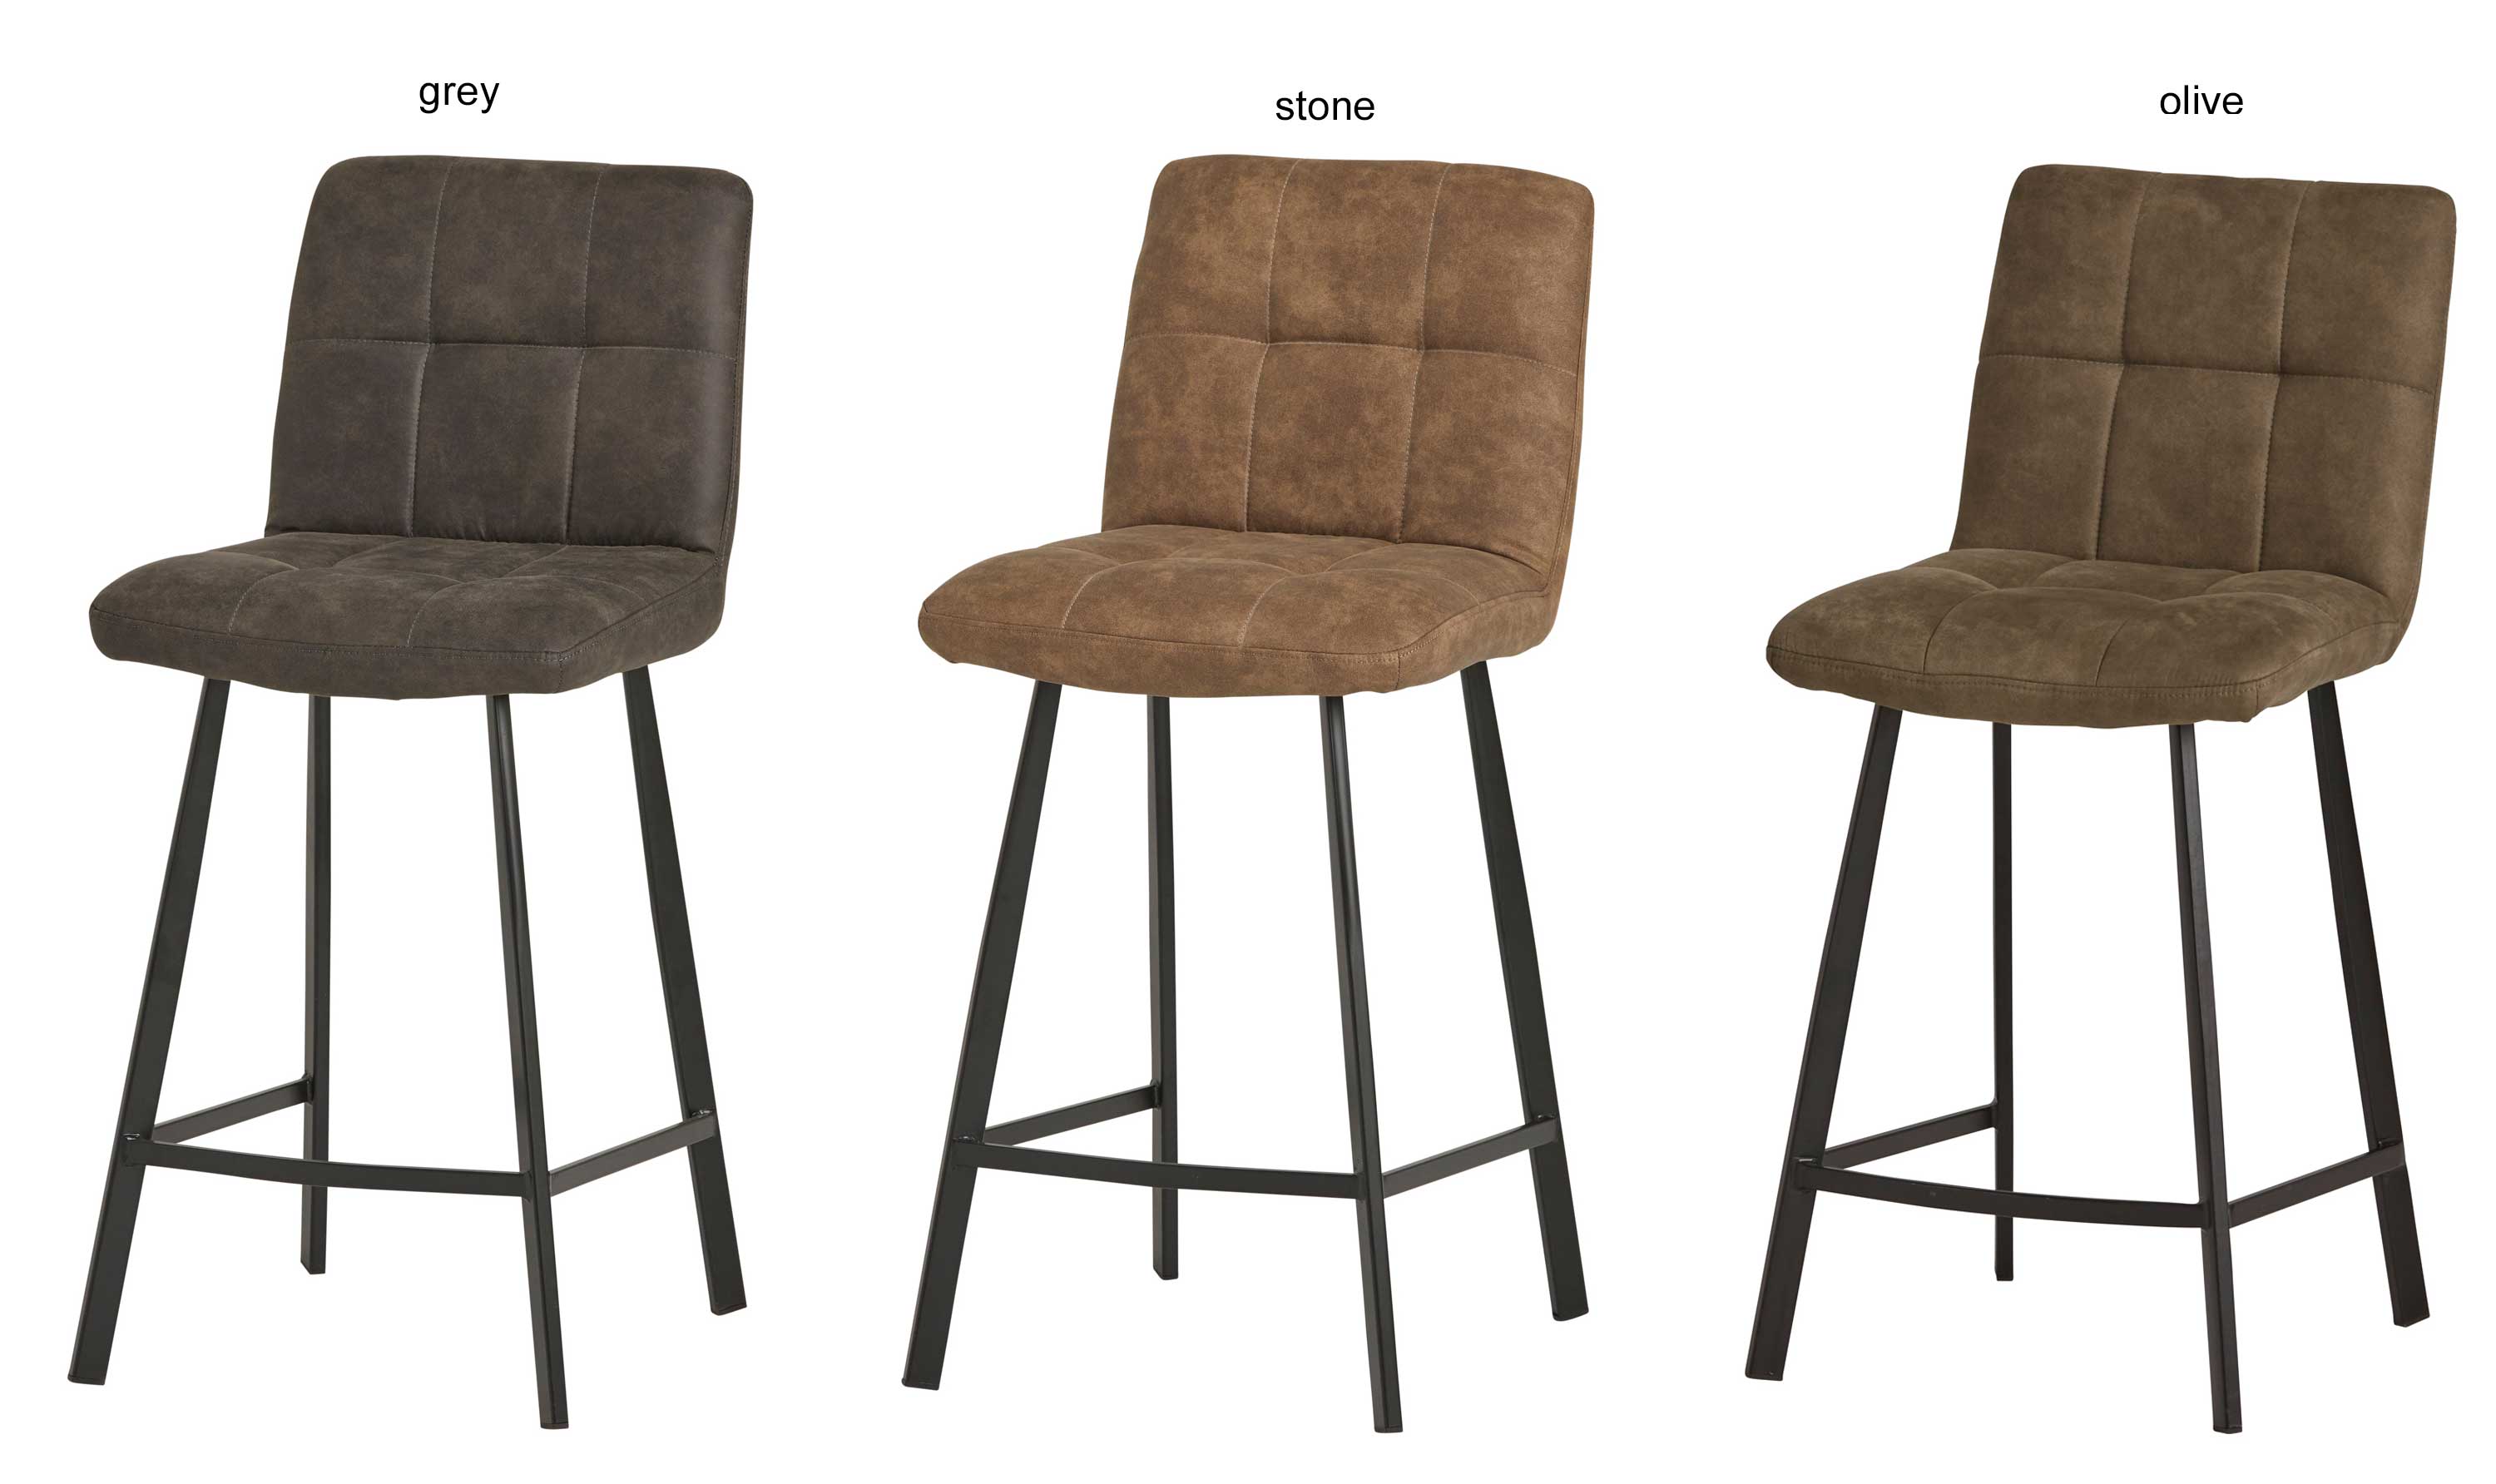 La Chair Bolero Barstuhl mit Metallgestell Lederlook grau braun oder olive